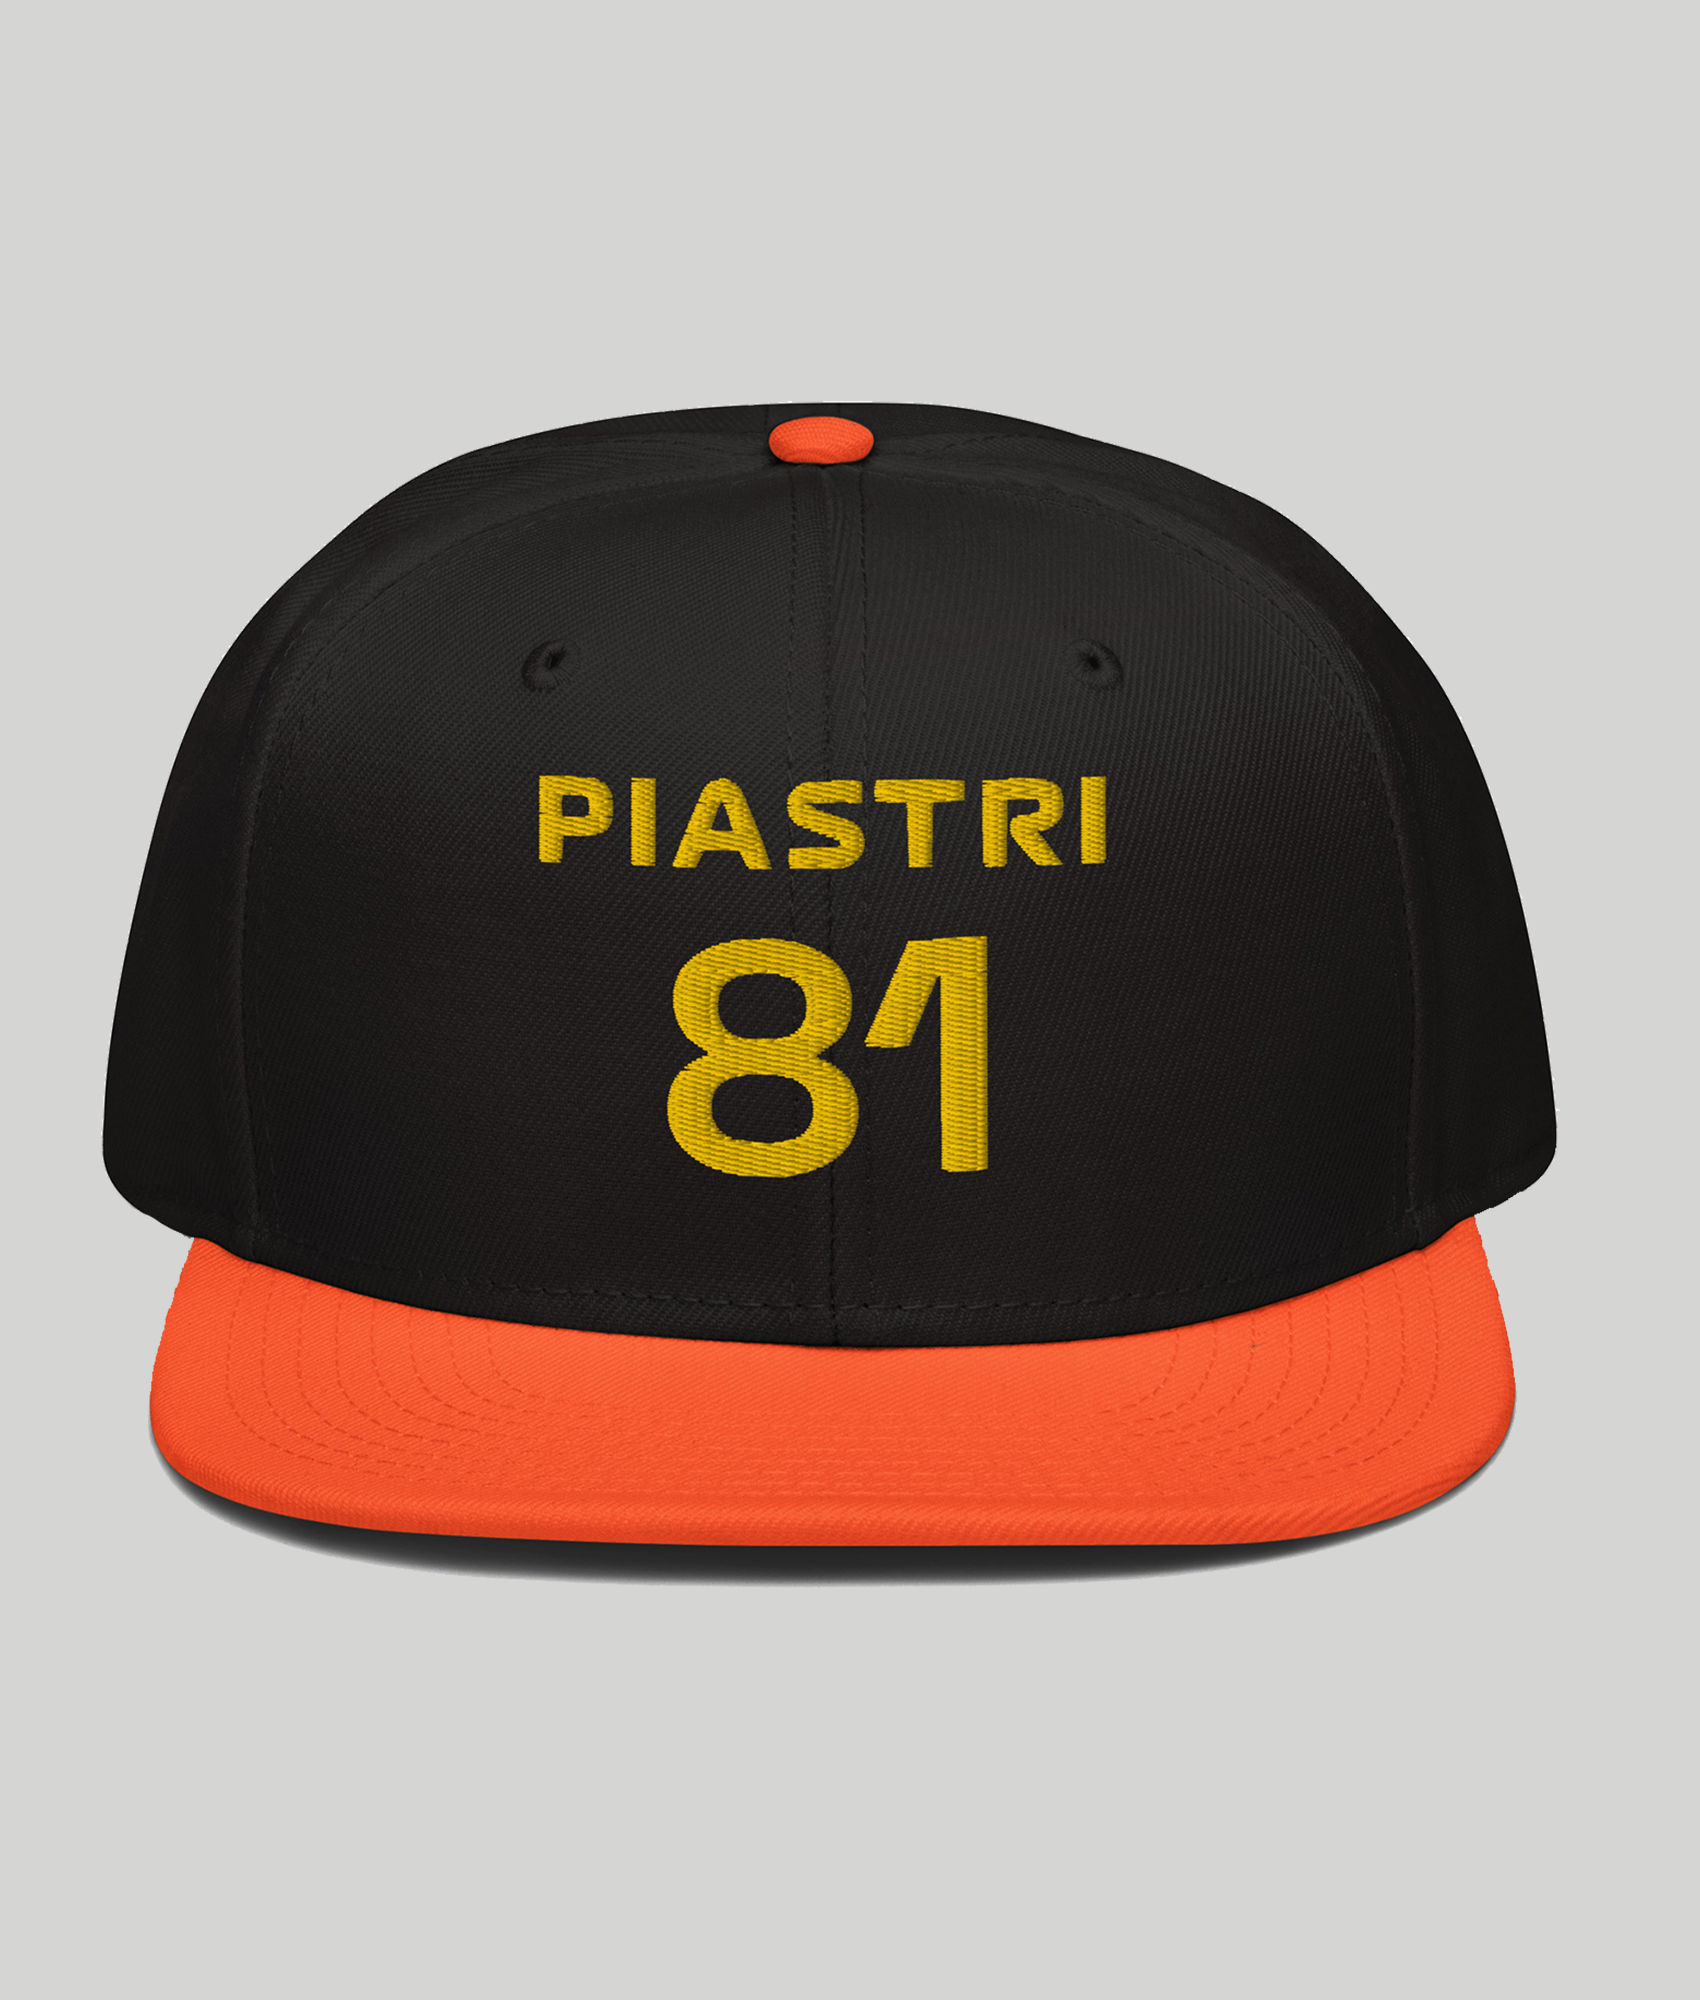 oscar piastri 81 snapback hat black and orange